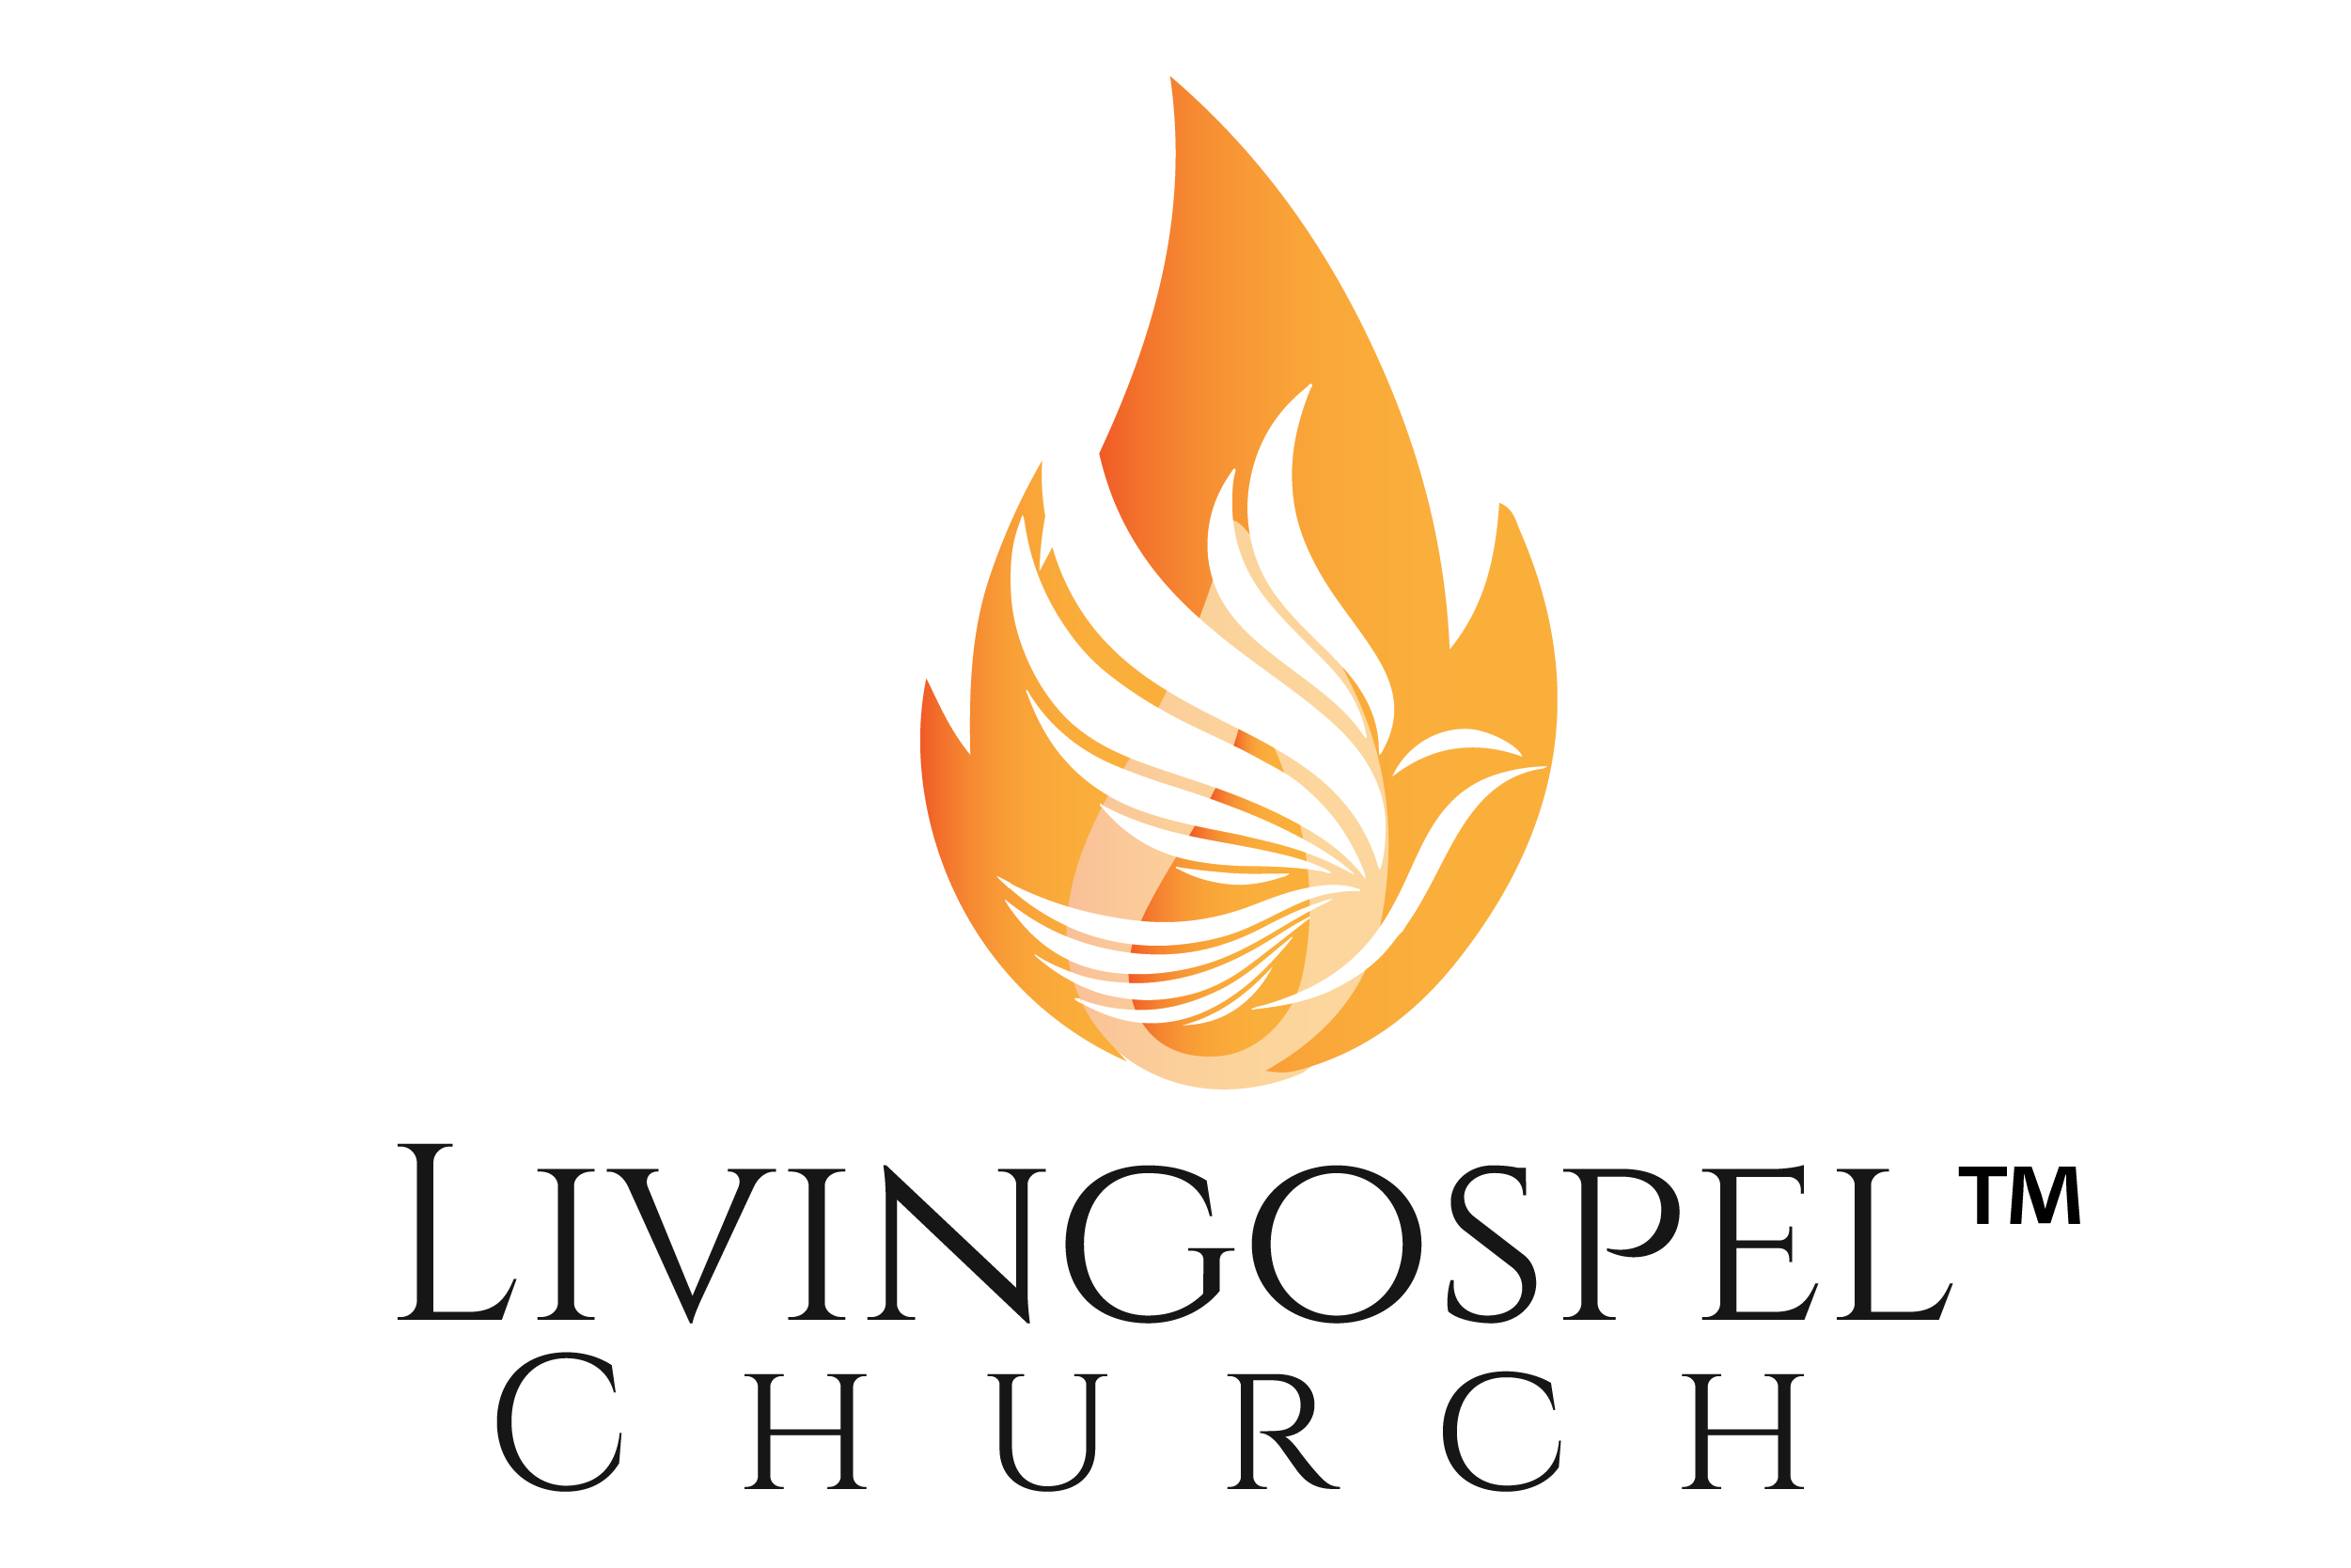 Livingospel Church